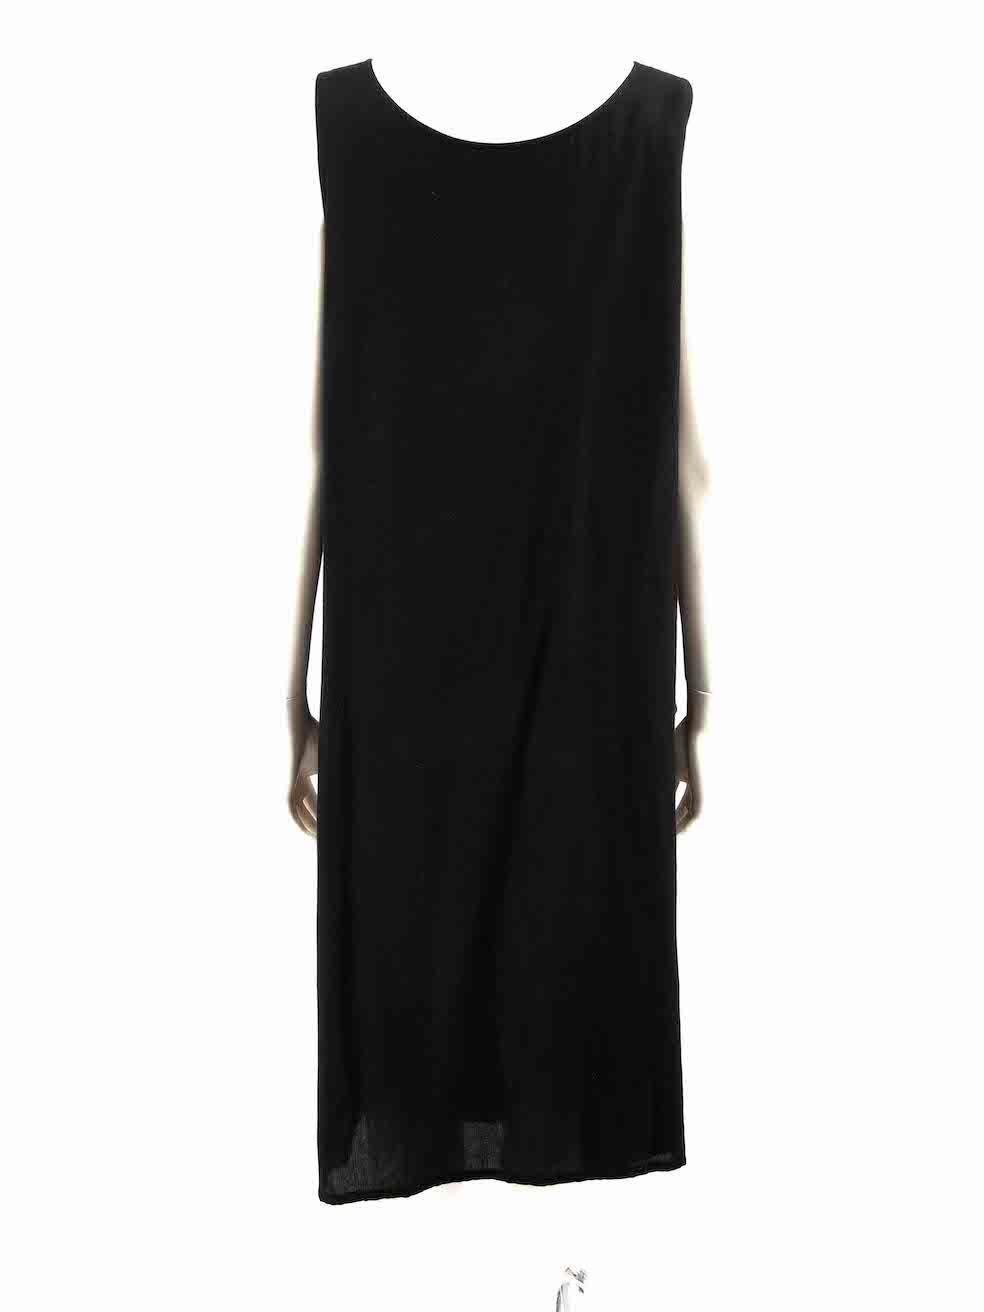 Yohji Yamamoto Black Cotton Sleeveless Midi Dress Size S In Good Condition For Sale In London, GB